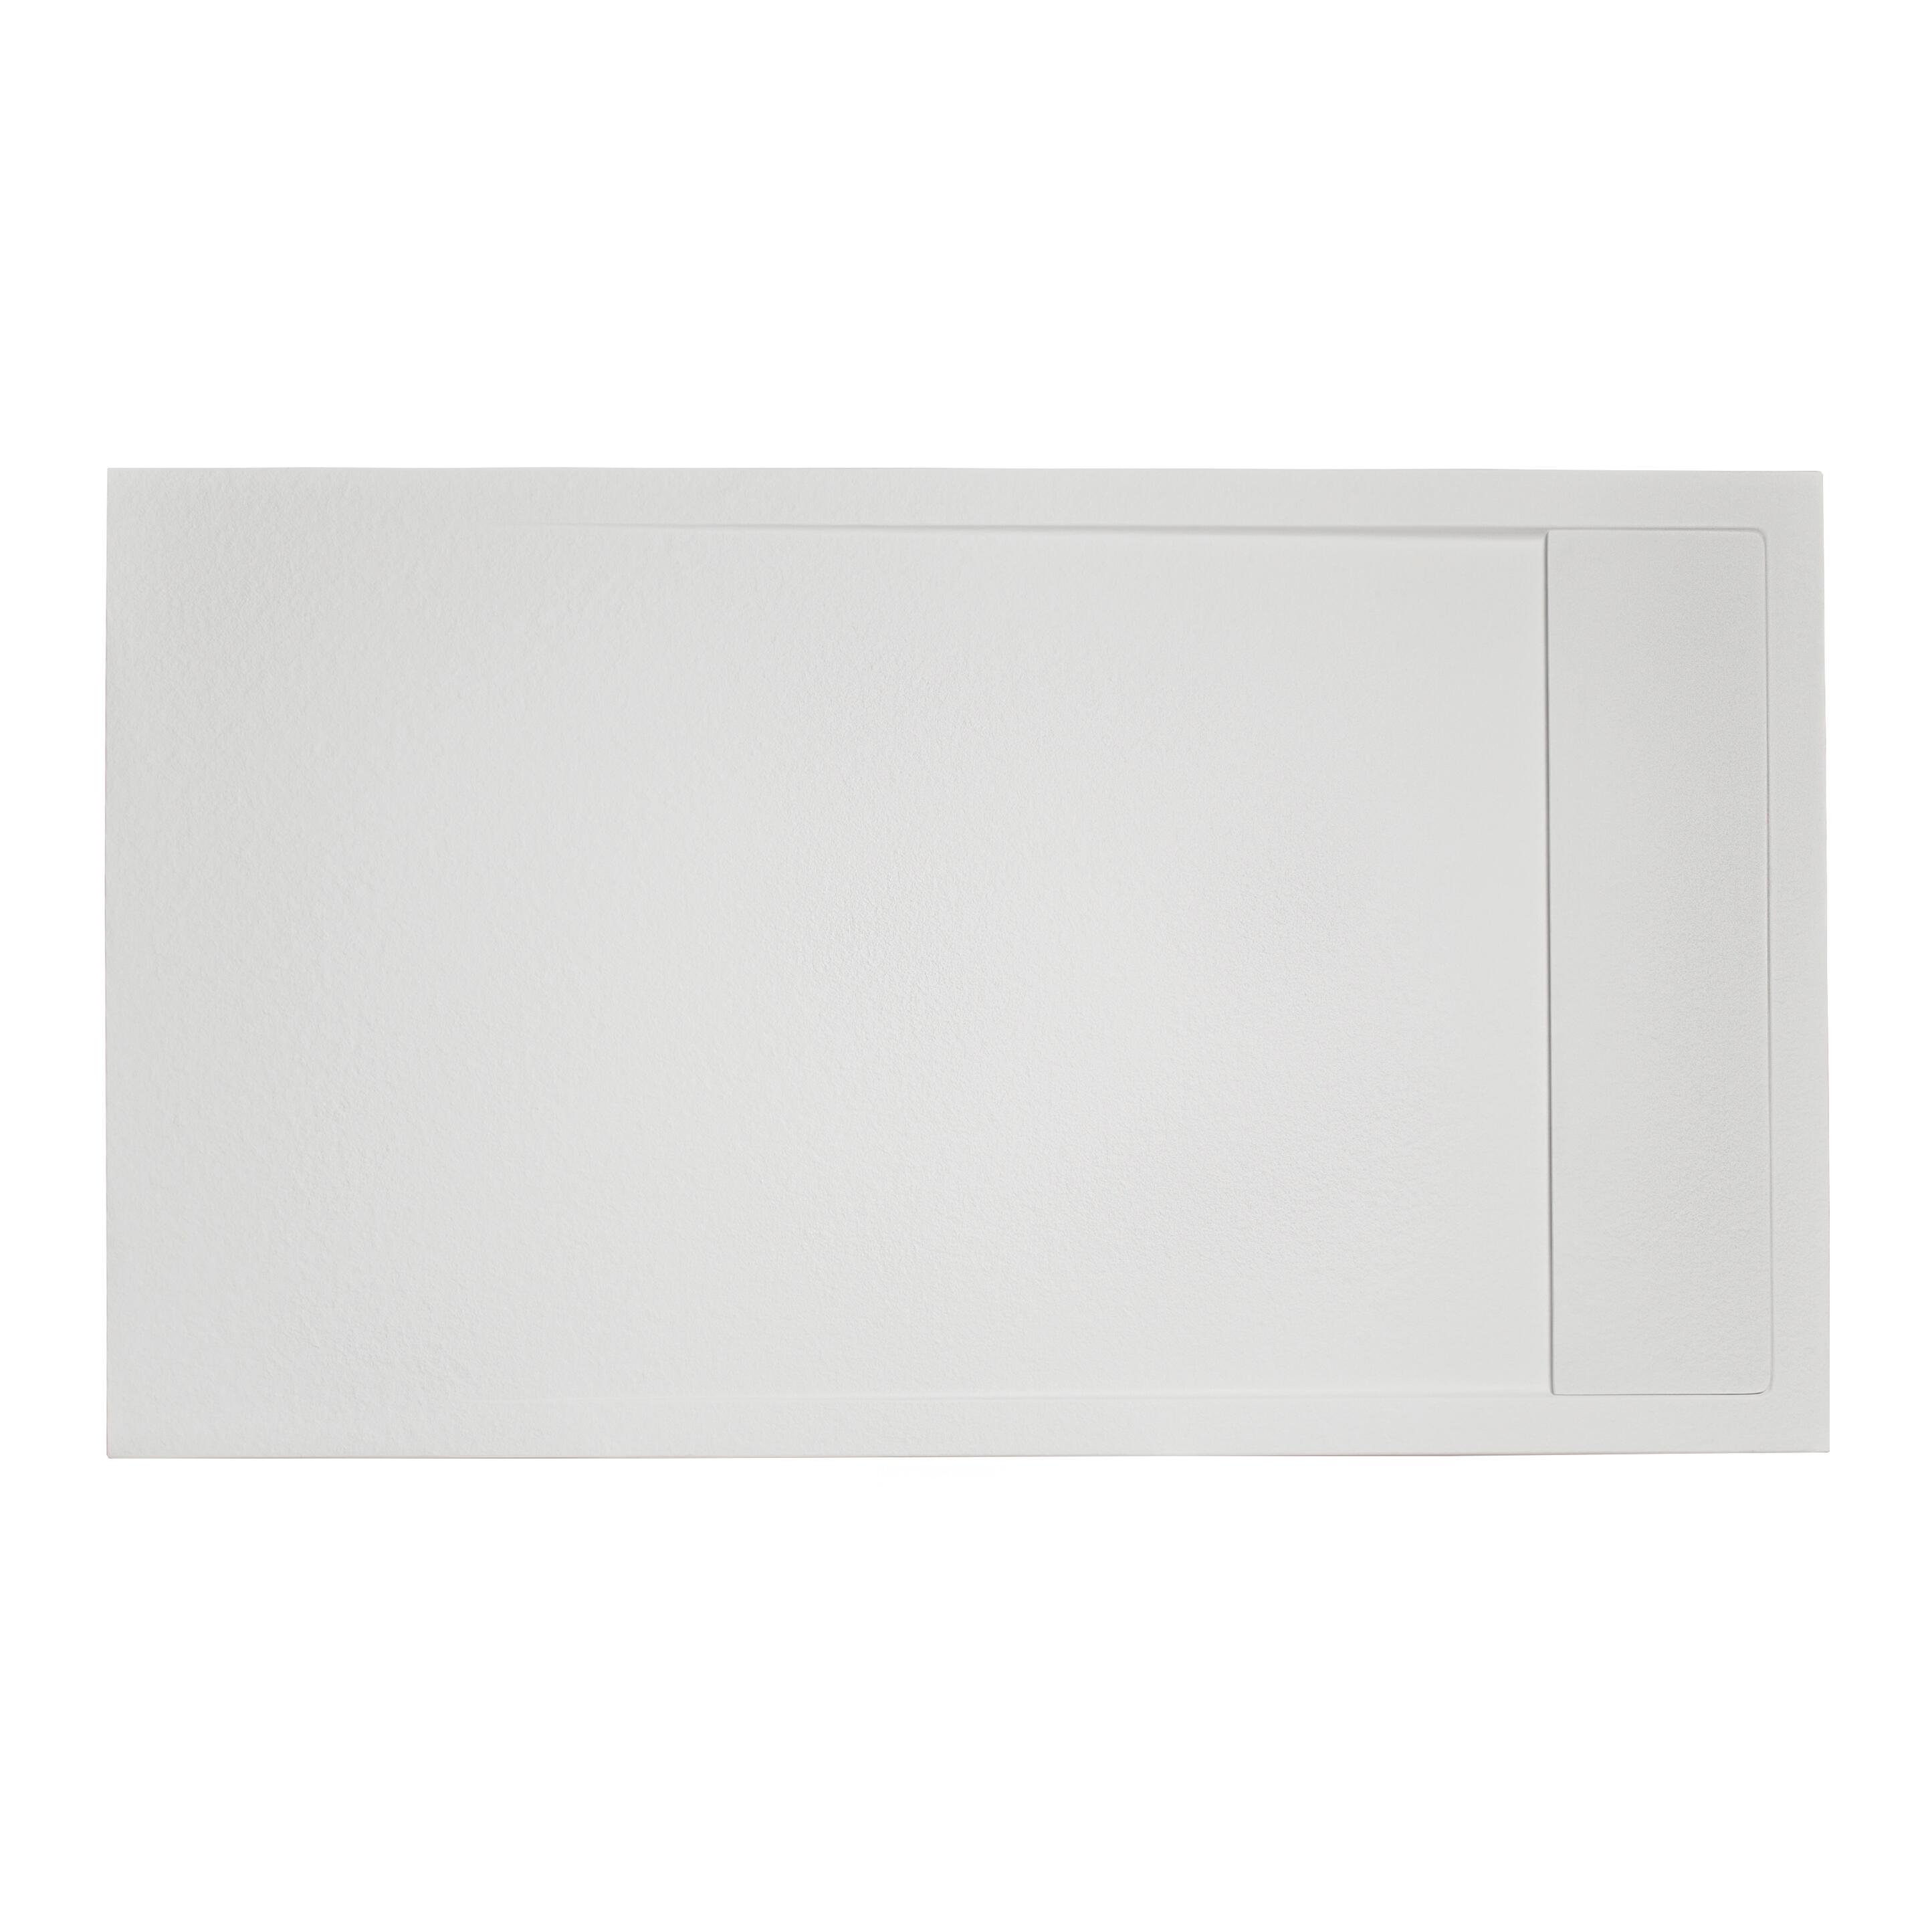 Piatto doccia gelcoat Neo 70 x 120 cm bianco - 1